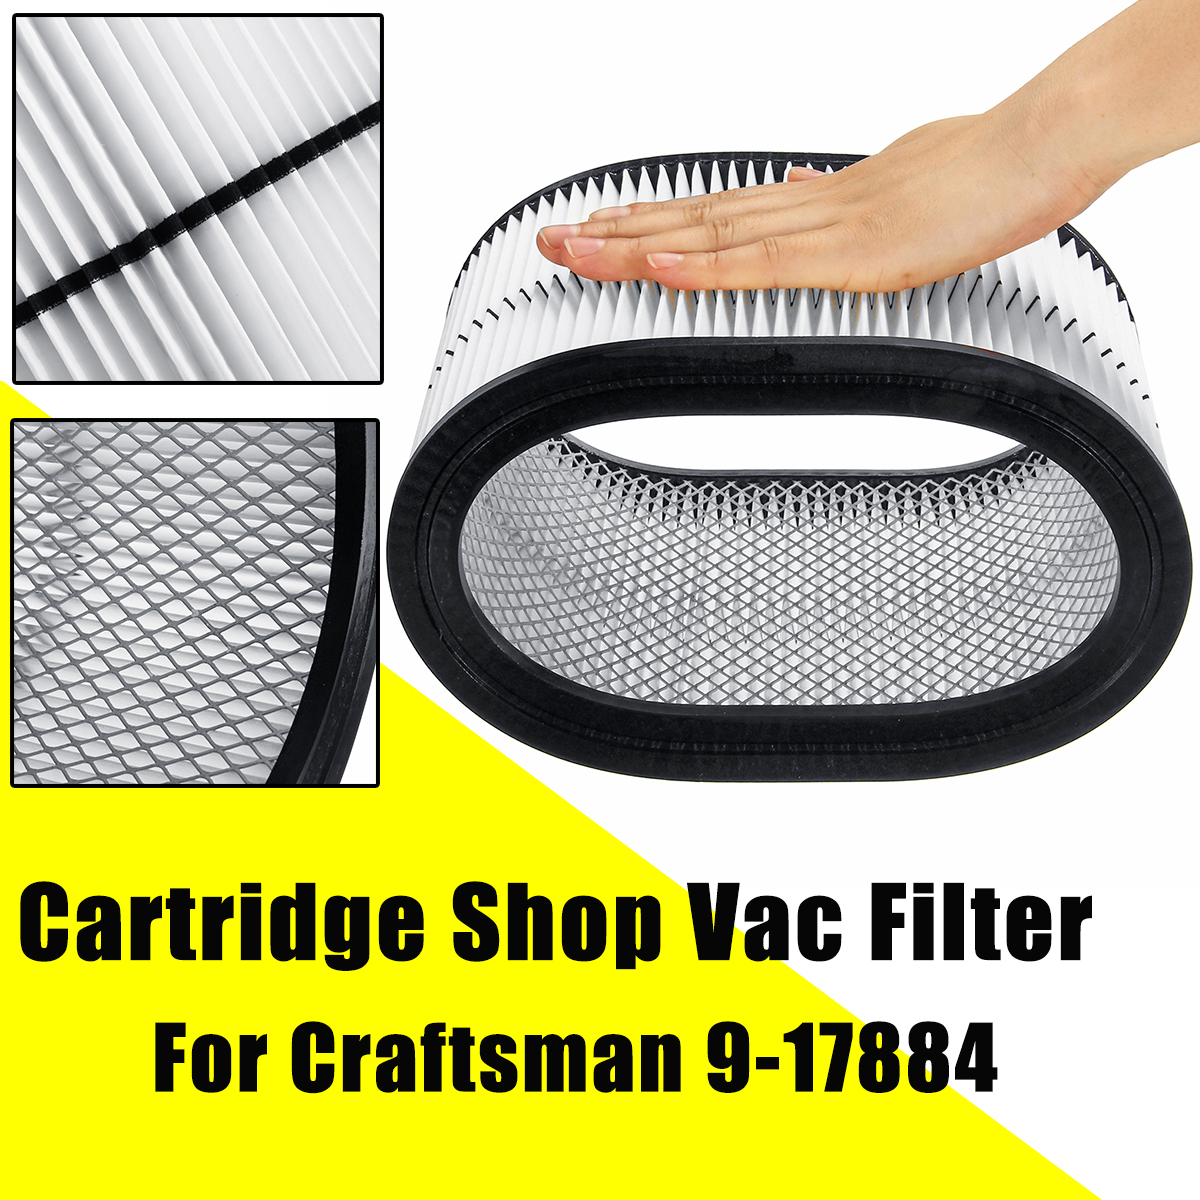 Cartridge-Shop-Vac-Filter-For-Craftsman-9-17884-6-8-12-16-Gallon-Vacuum-02-2004-1510983-2